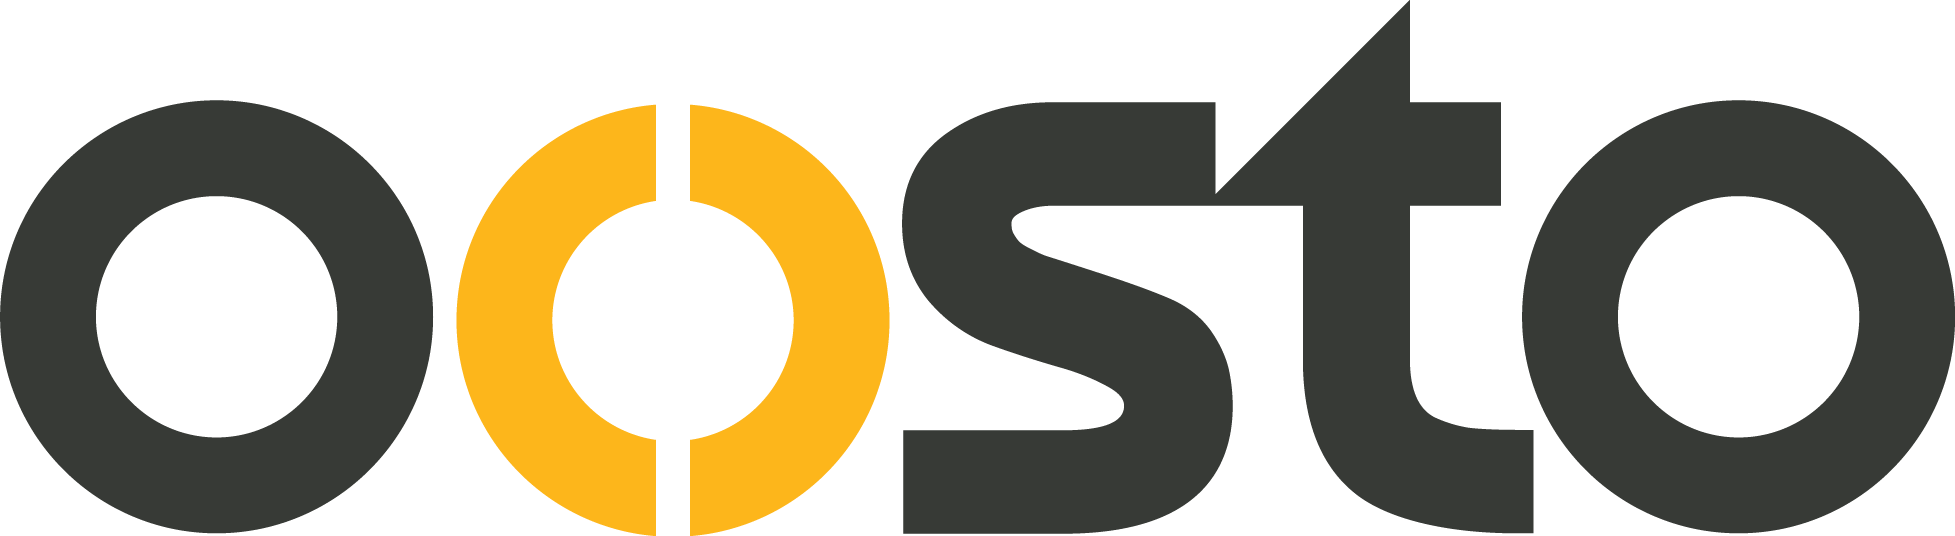 Vision Fund investment portfolio company Oosto's logo